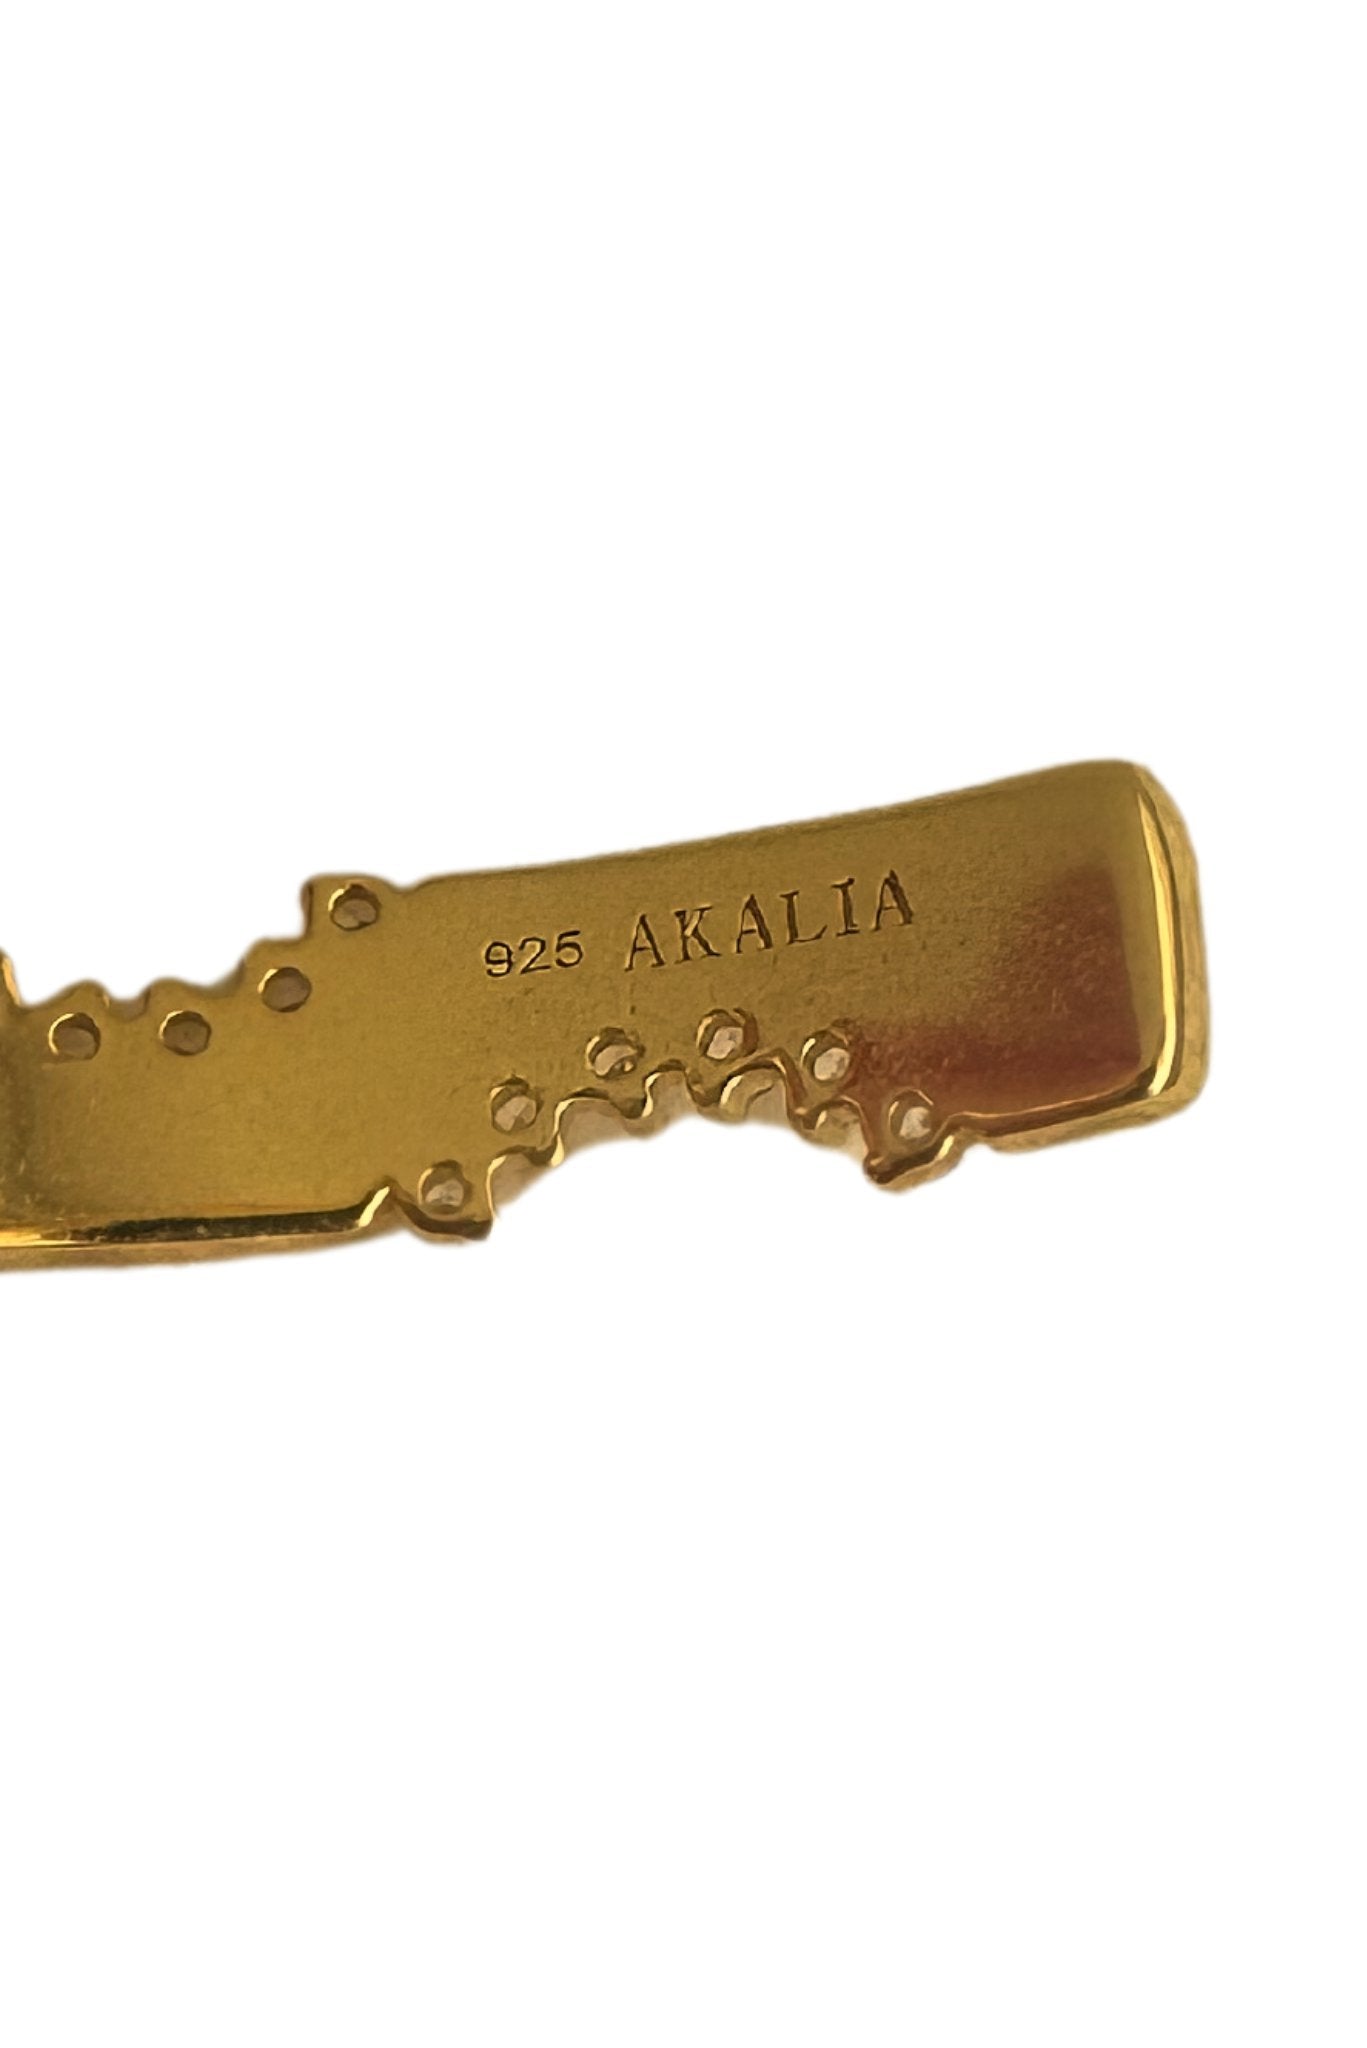 Waterproof Gold Plated with Diamond Cuff Sterling Silver Bracelet - Akalia